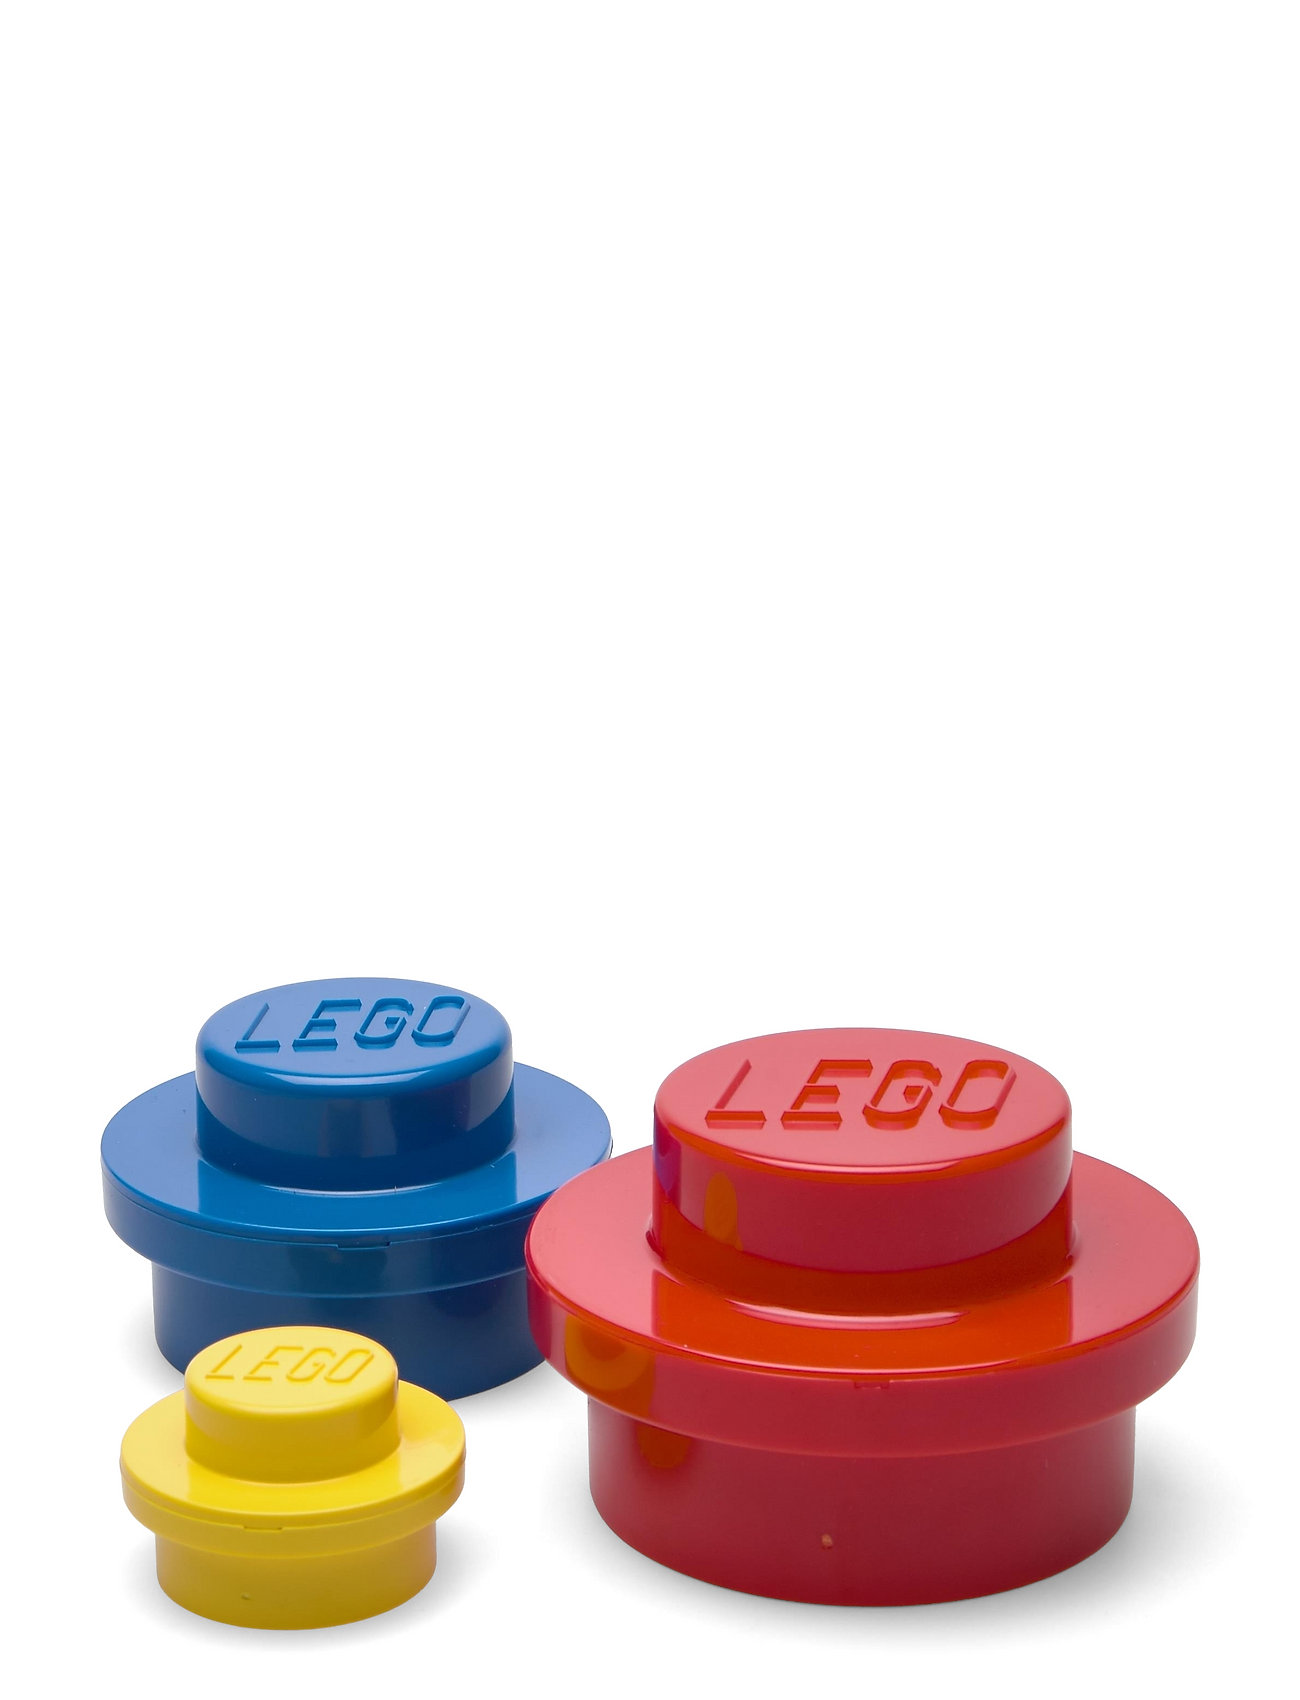 LEGO STORAGE Lego Wall Hangers Set Of 3 Home Kids Decor Hooks & Rød STORAGE*Betinget Tilbud